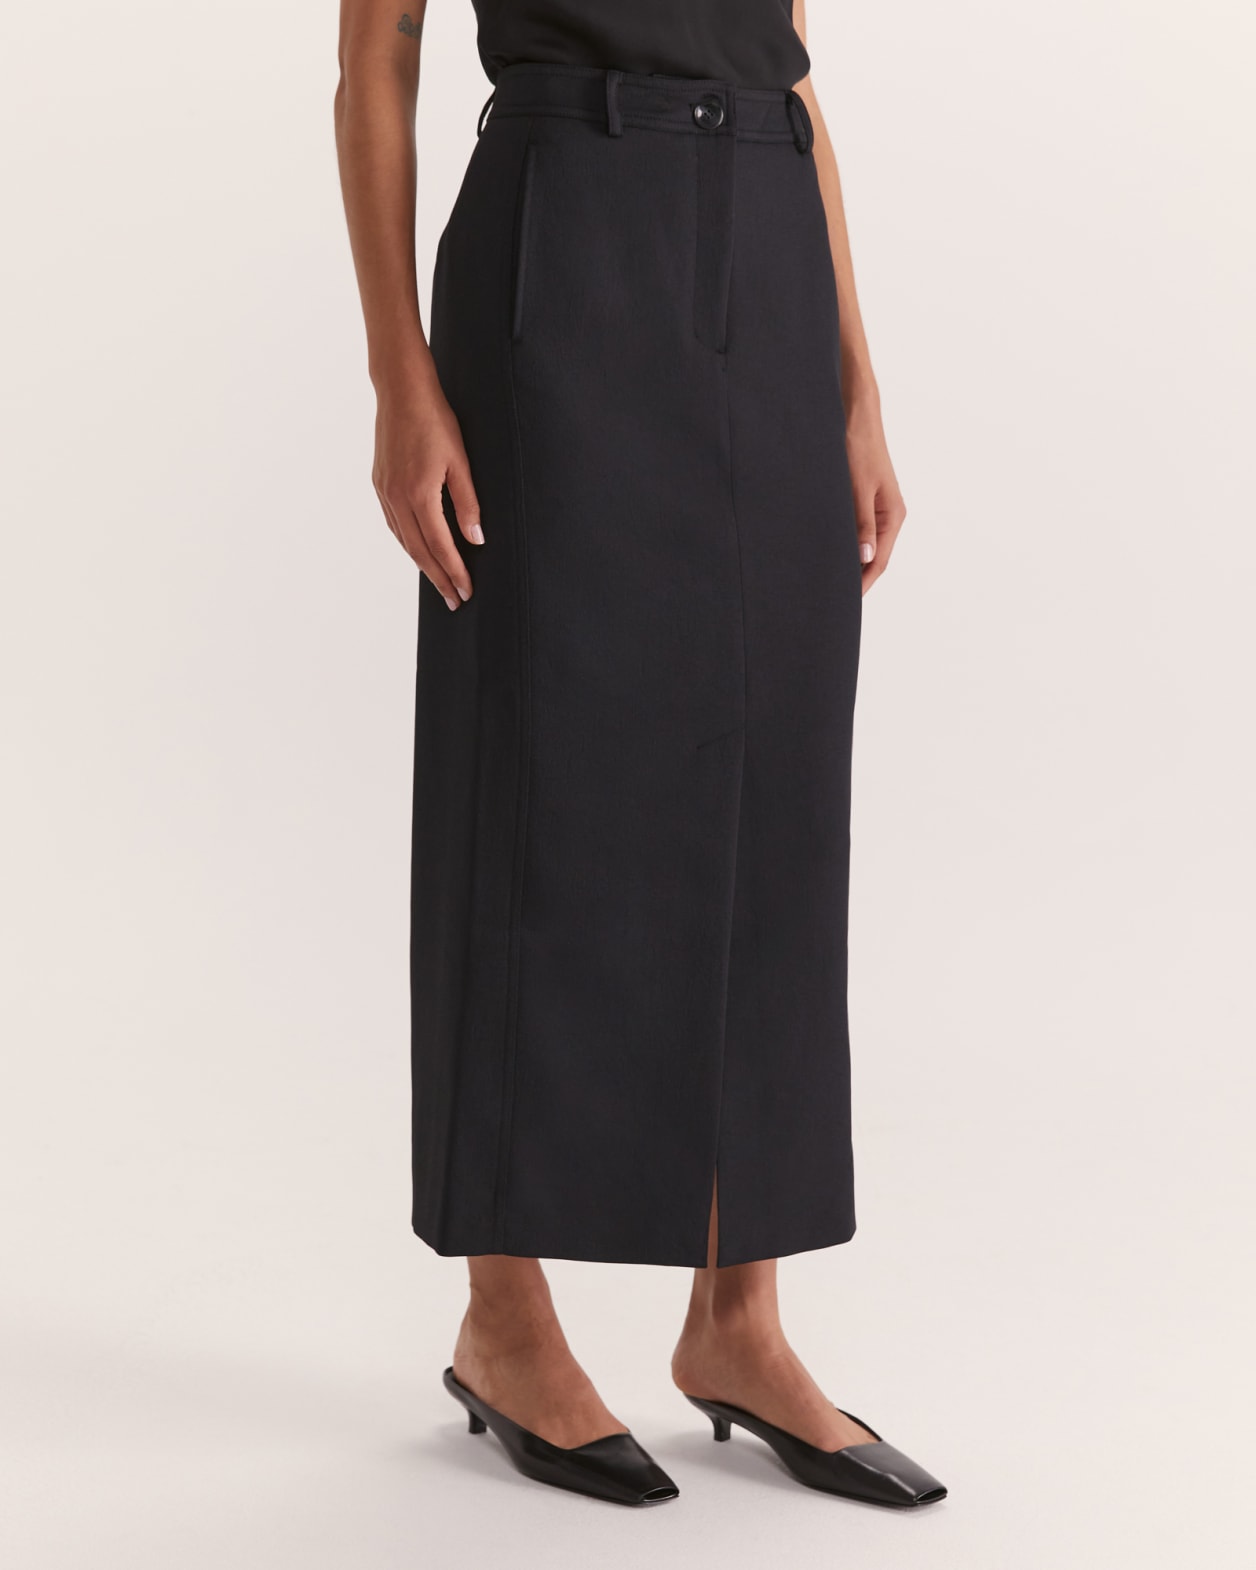 Dharma Midi Skirt in BLACK